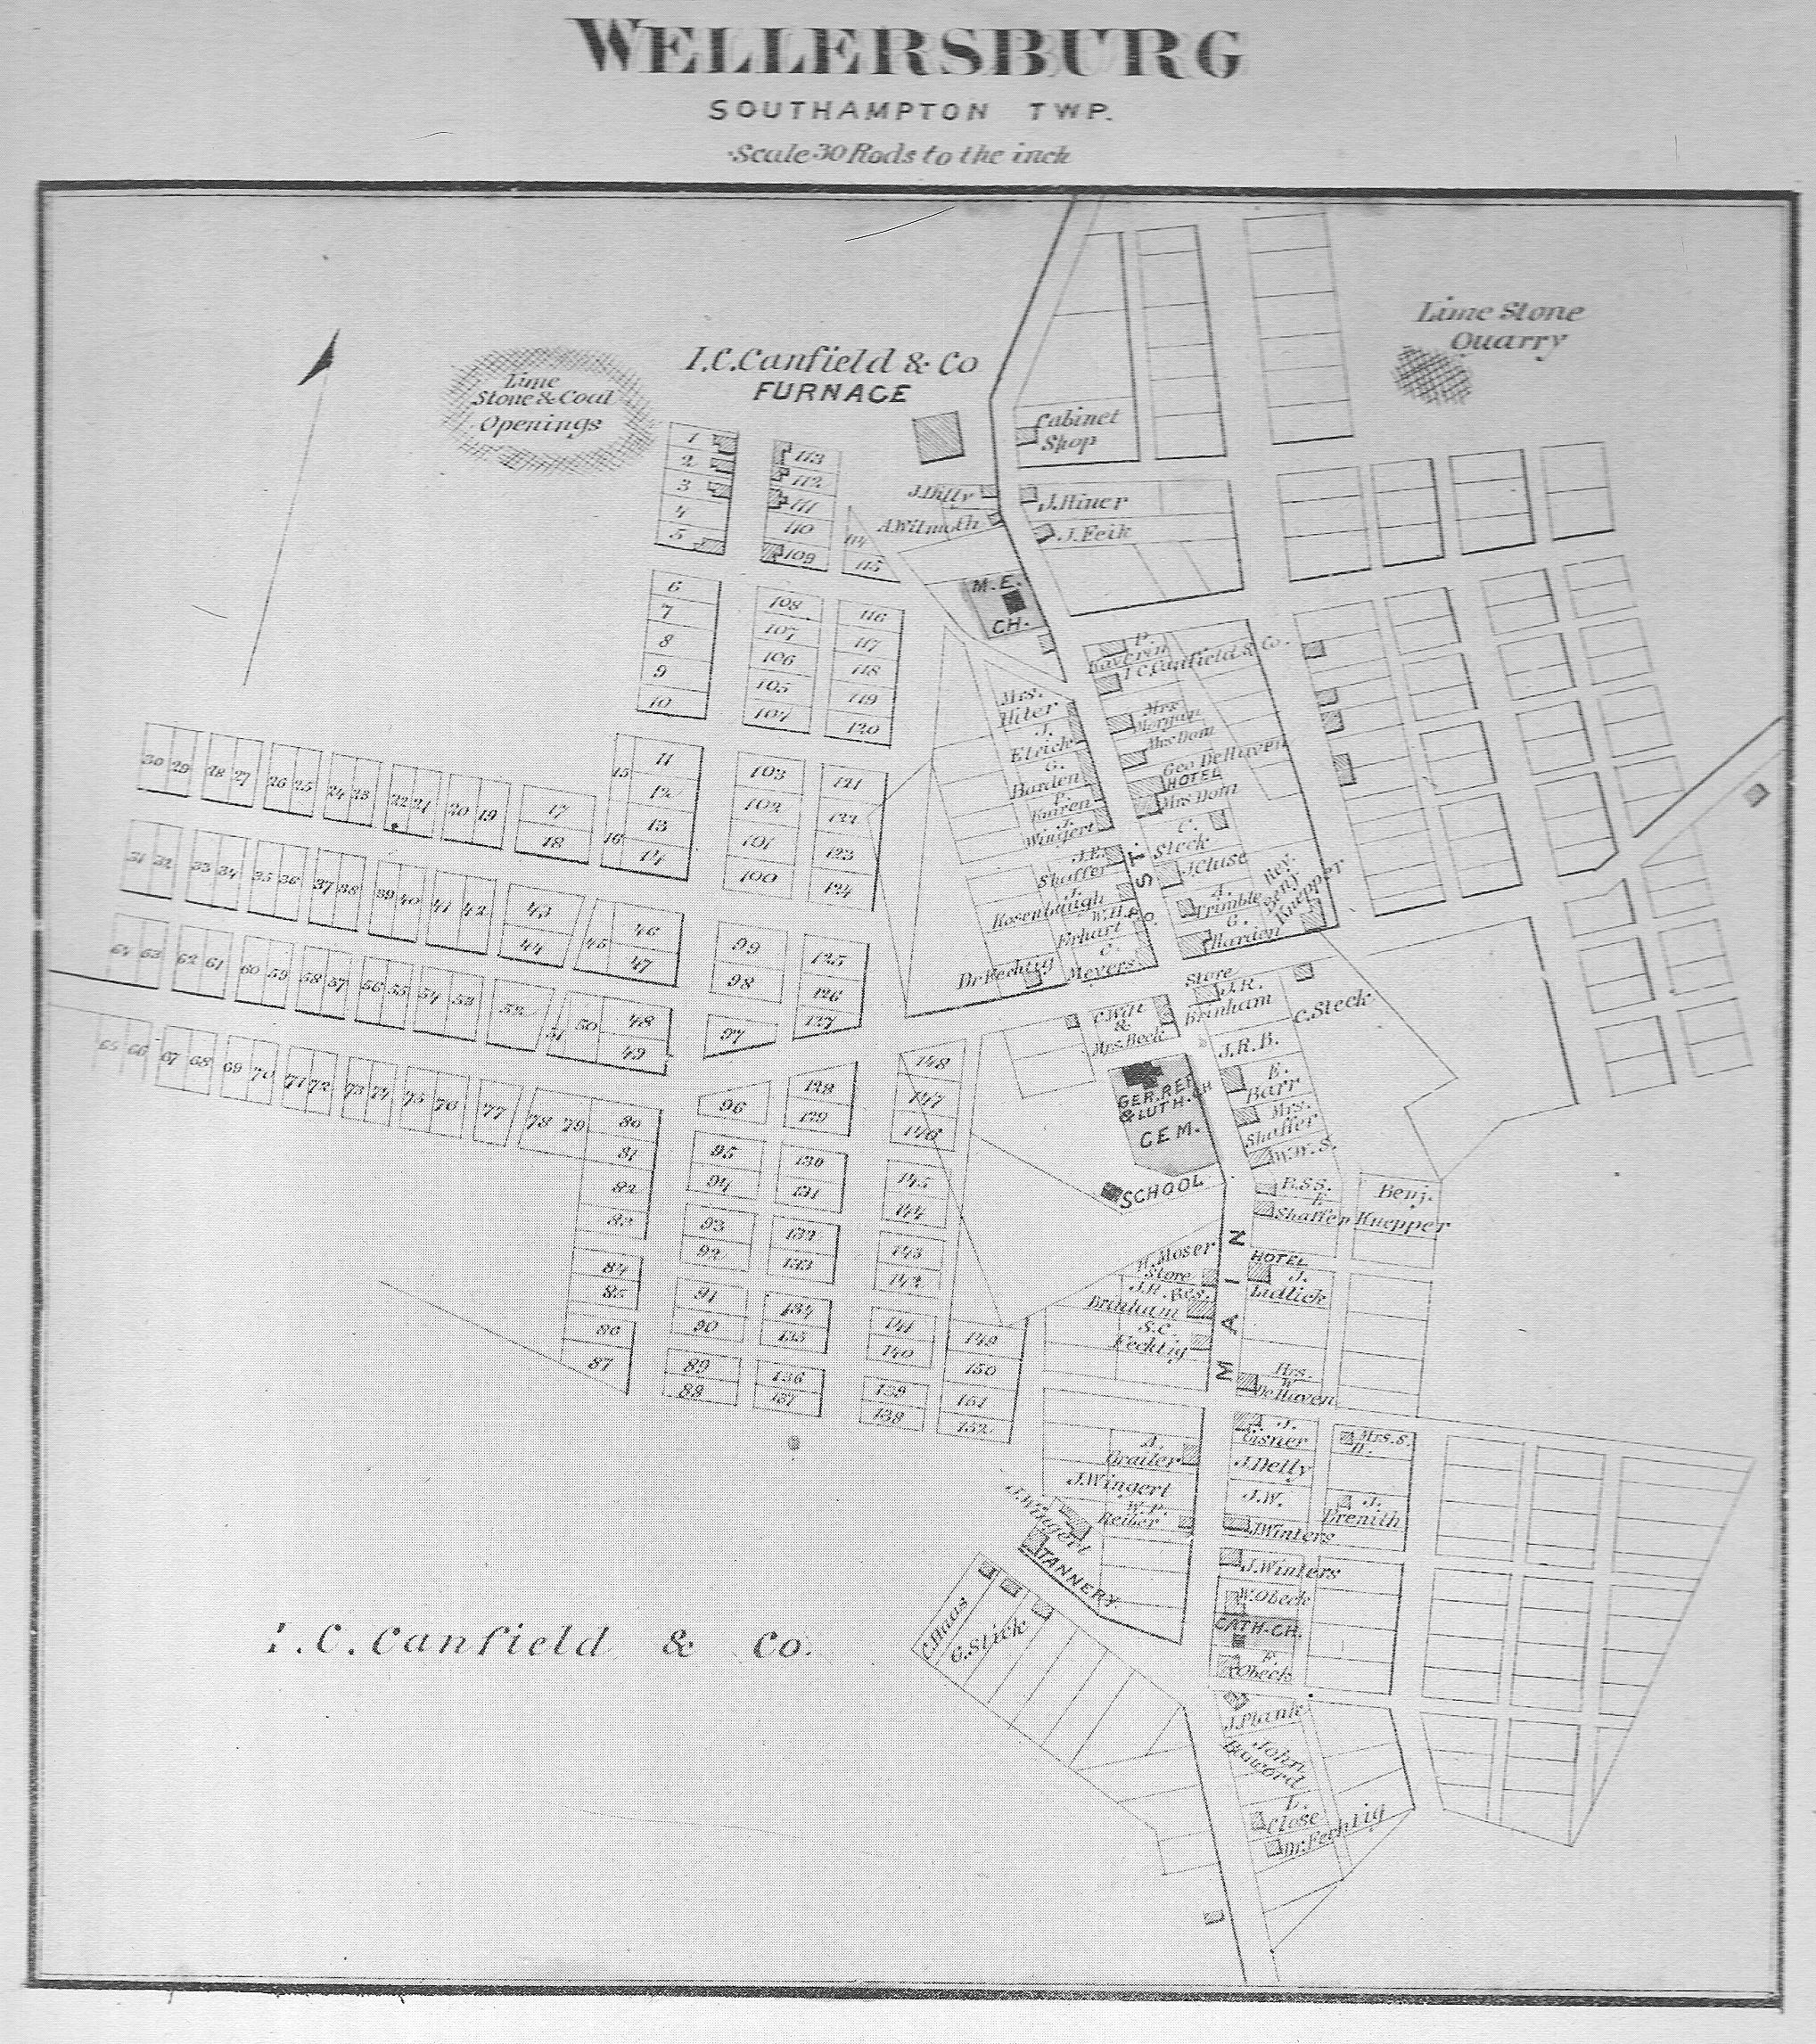 1876 Wellersburg map from Beers Atlas of Somerset County, PA